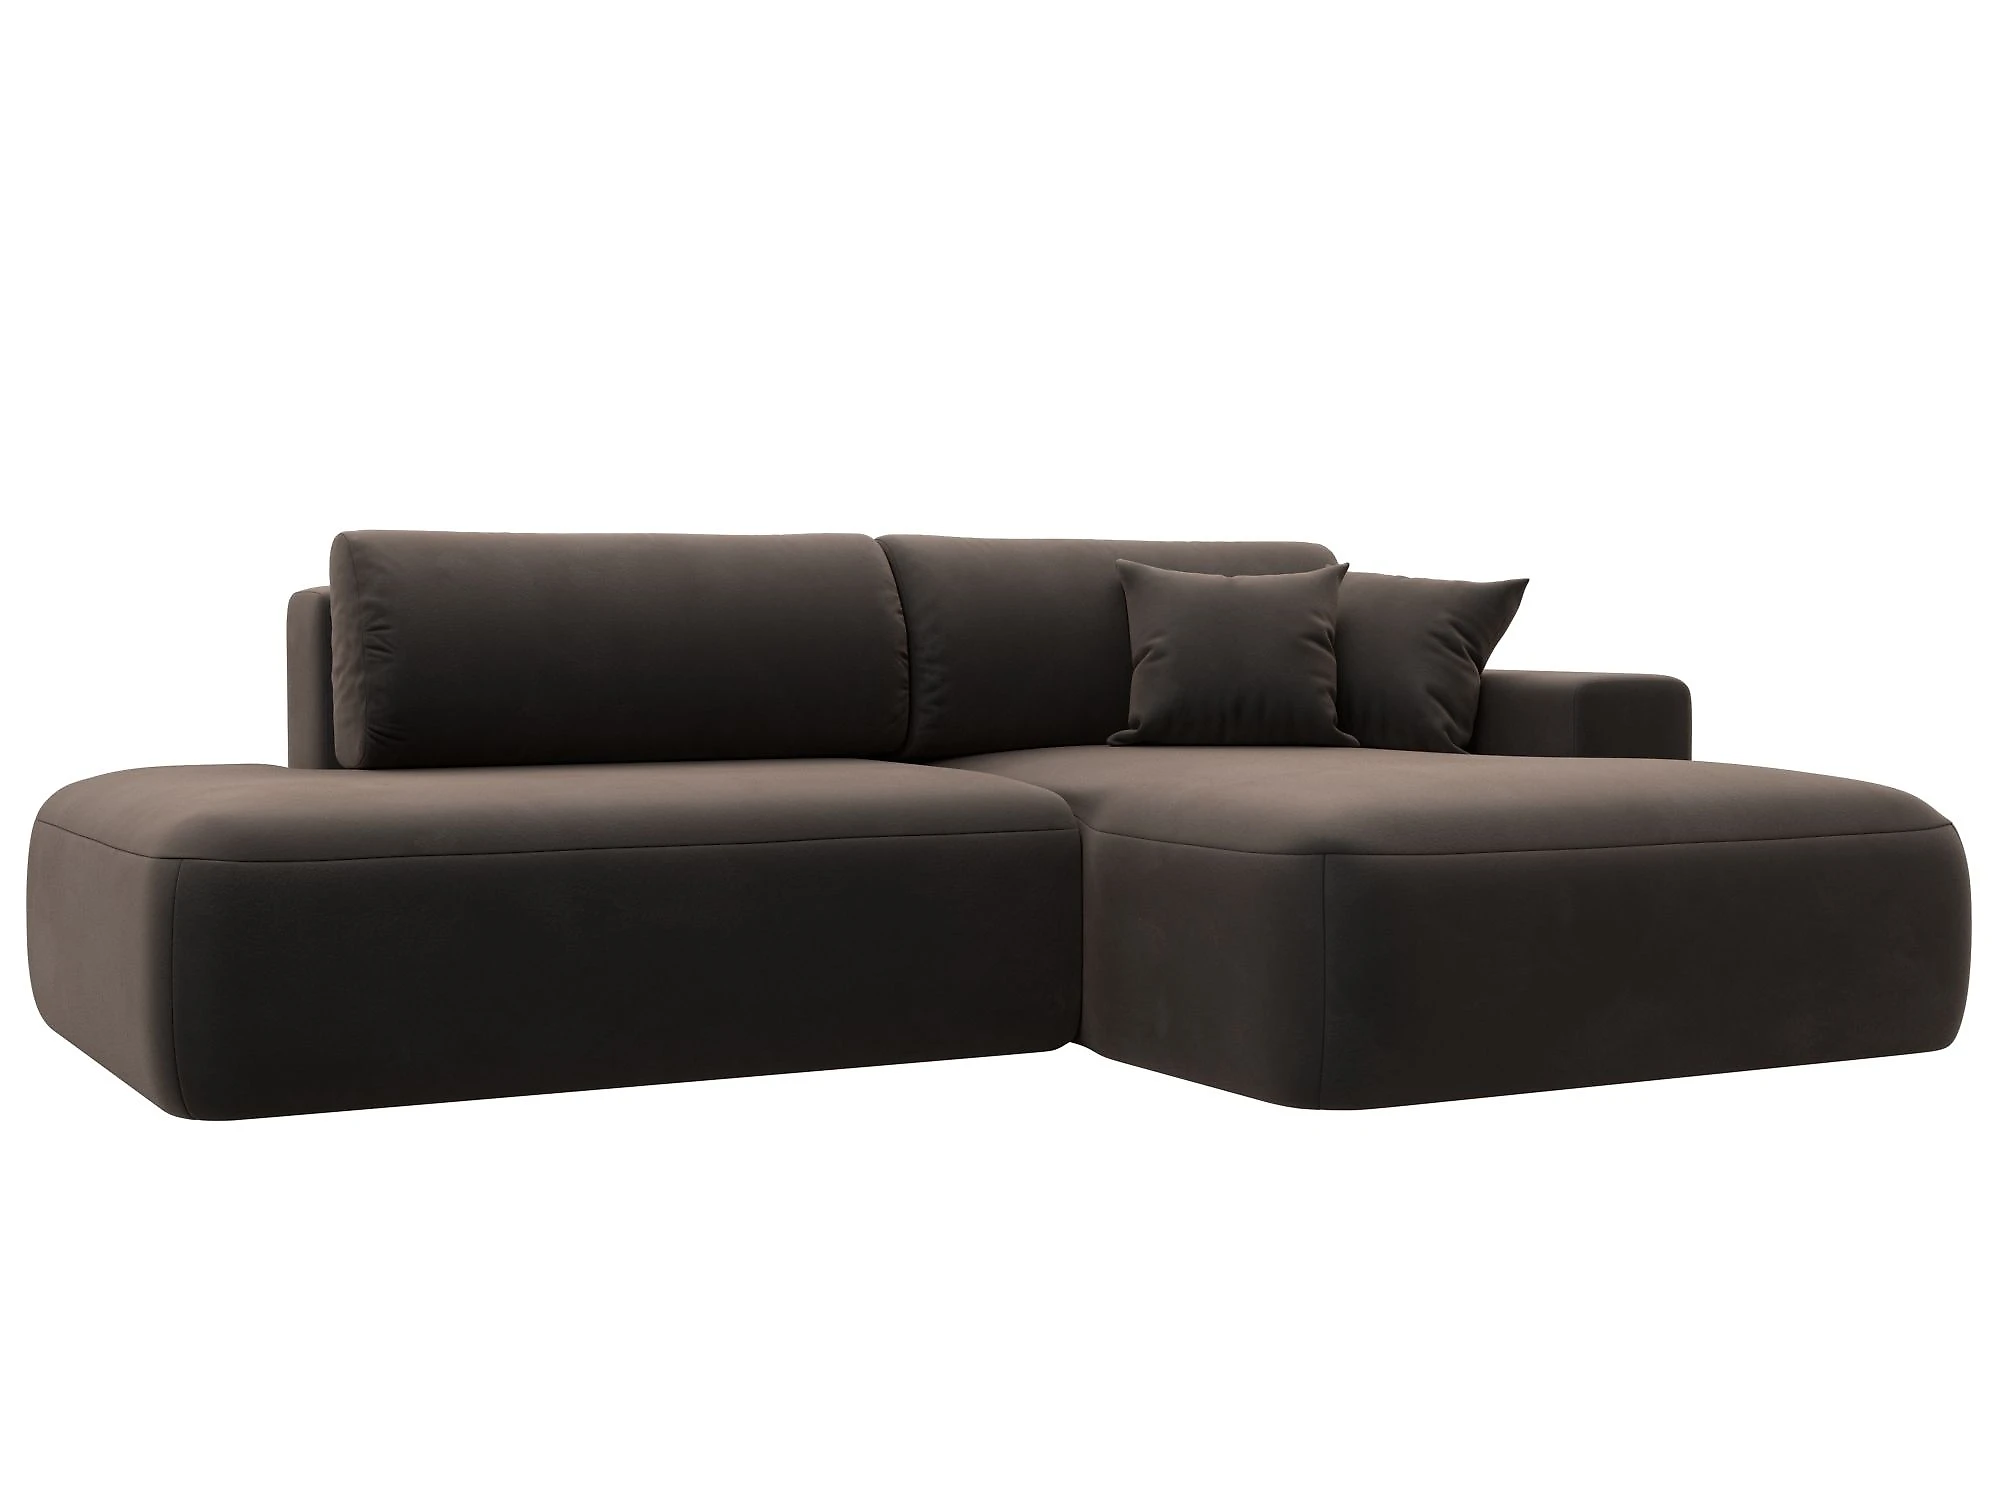 Коричневый диван Лига-036 Модерн Плюш Дизайн 4